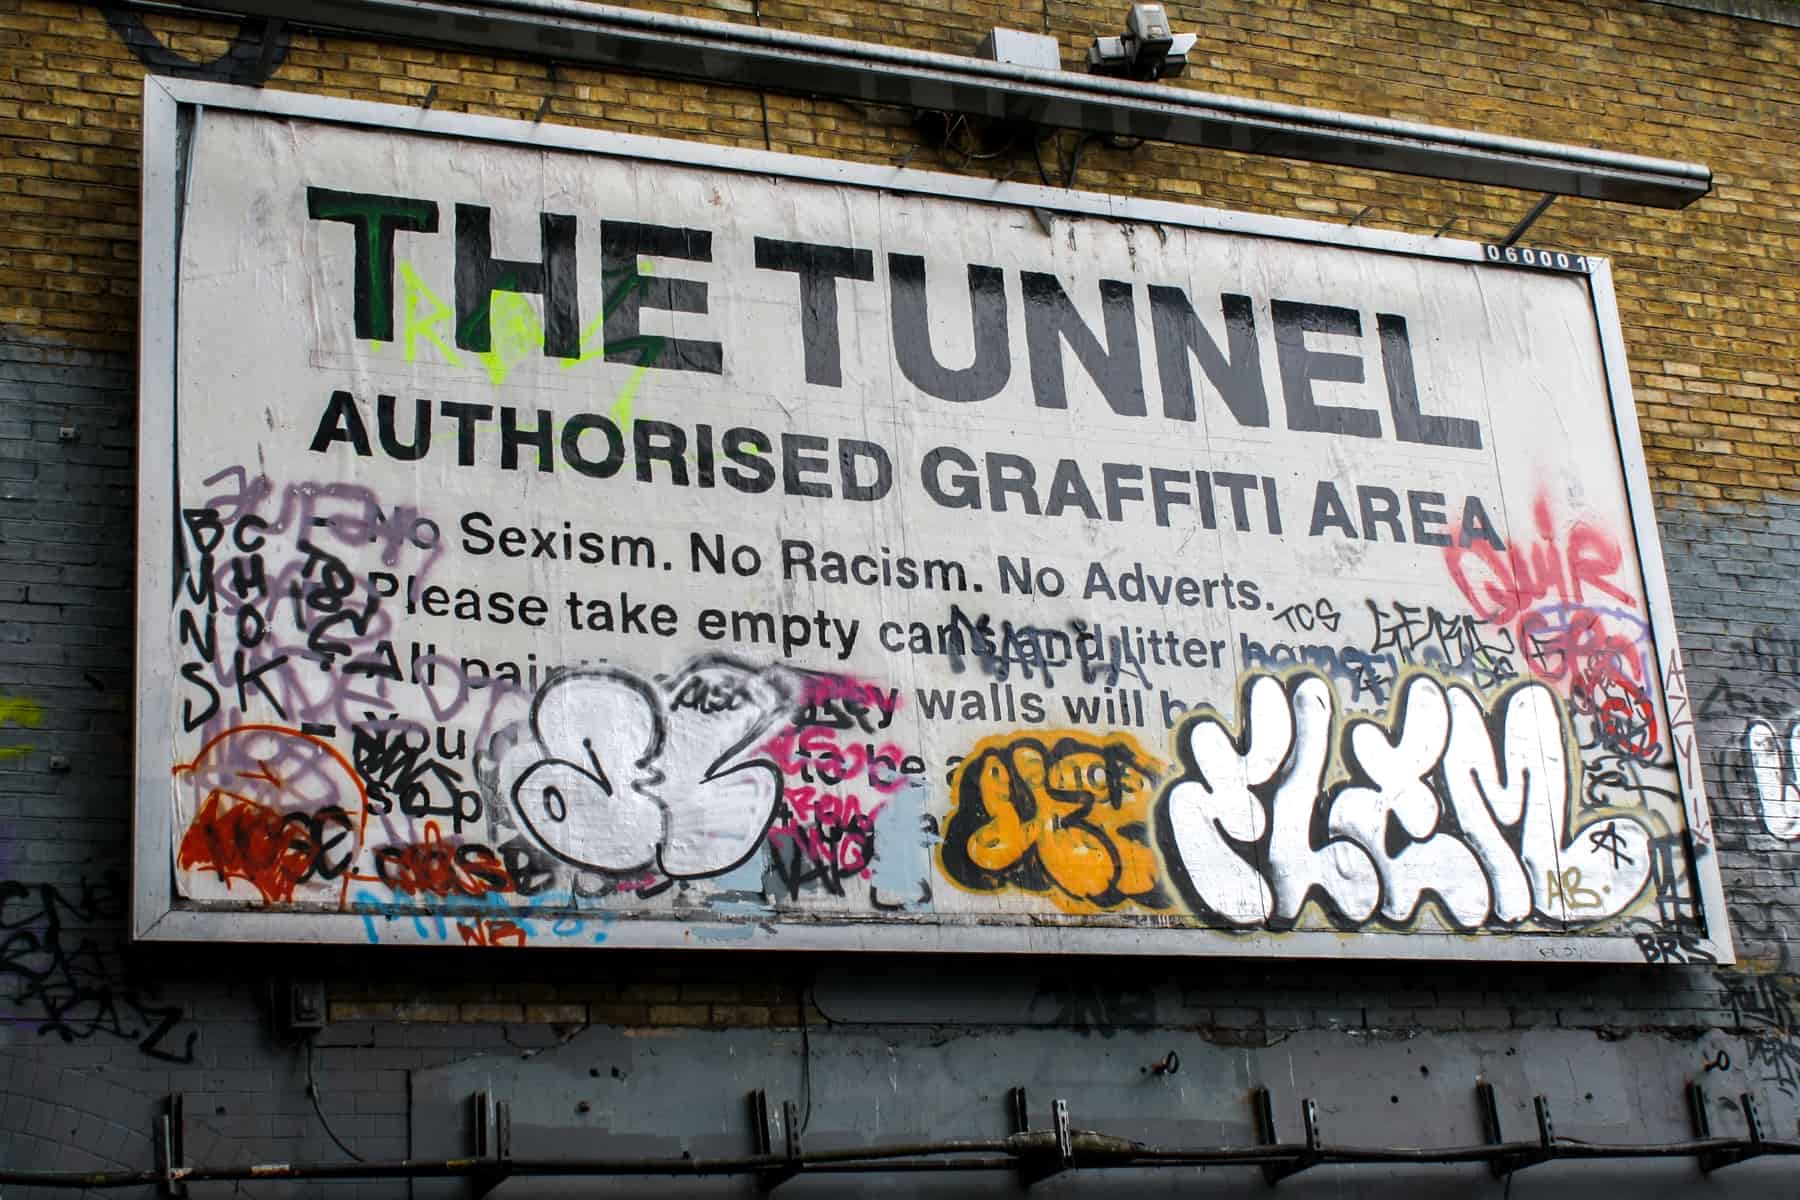 London Graffiti Tunnel sign that reads: The Tunnel Authorised Graffiti Area.